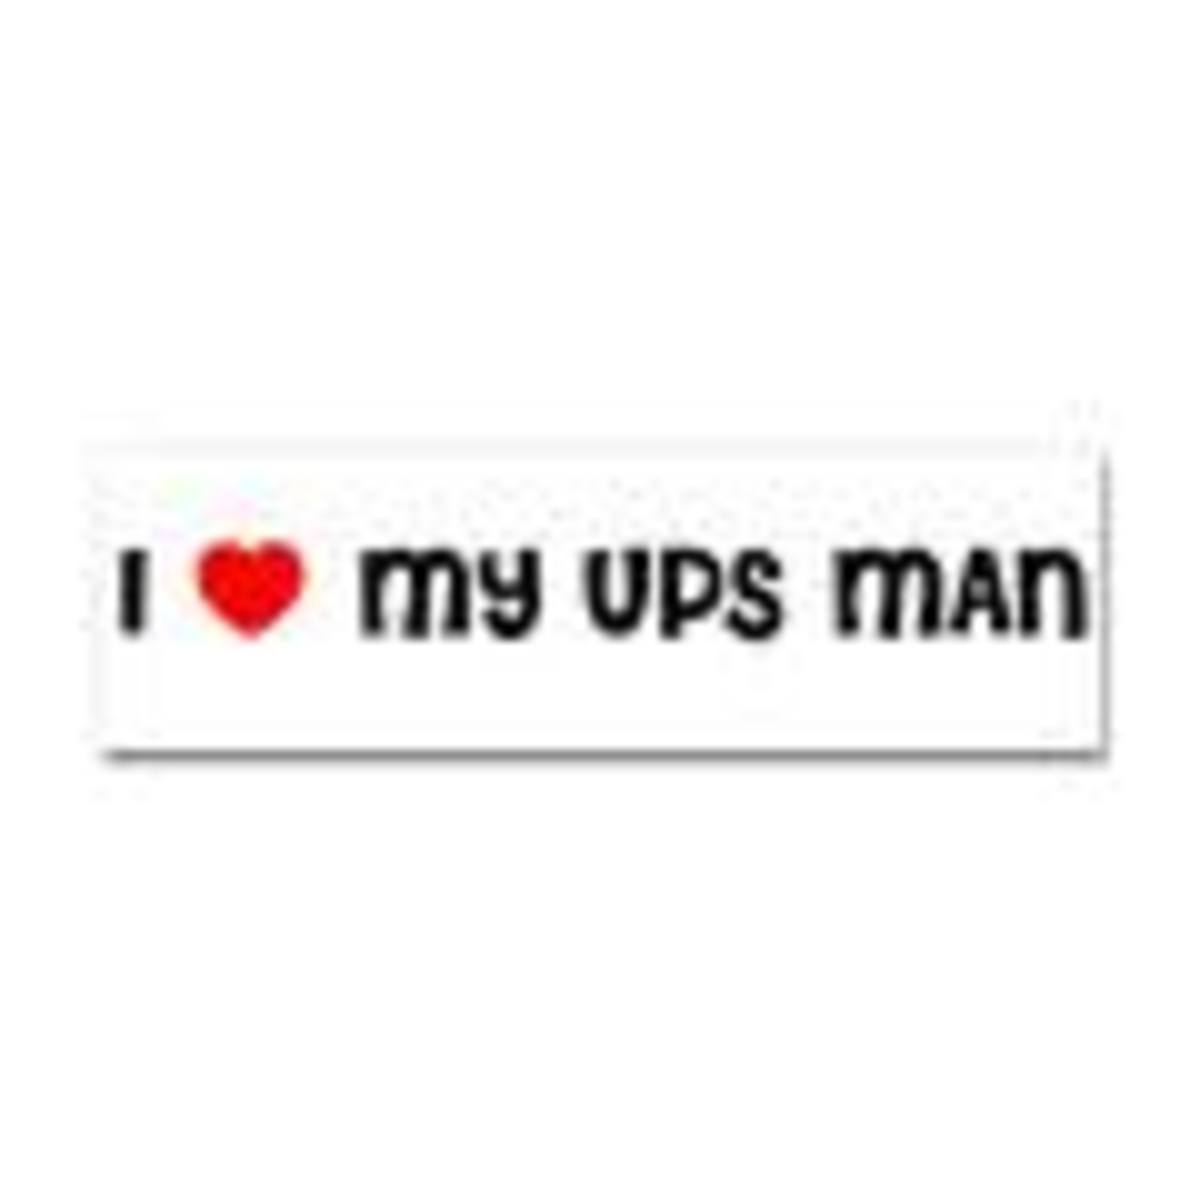 I'm Having an Affair with the UPS Man